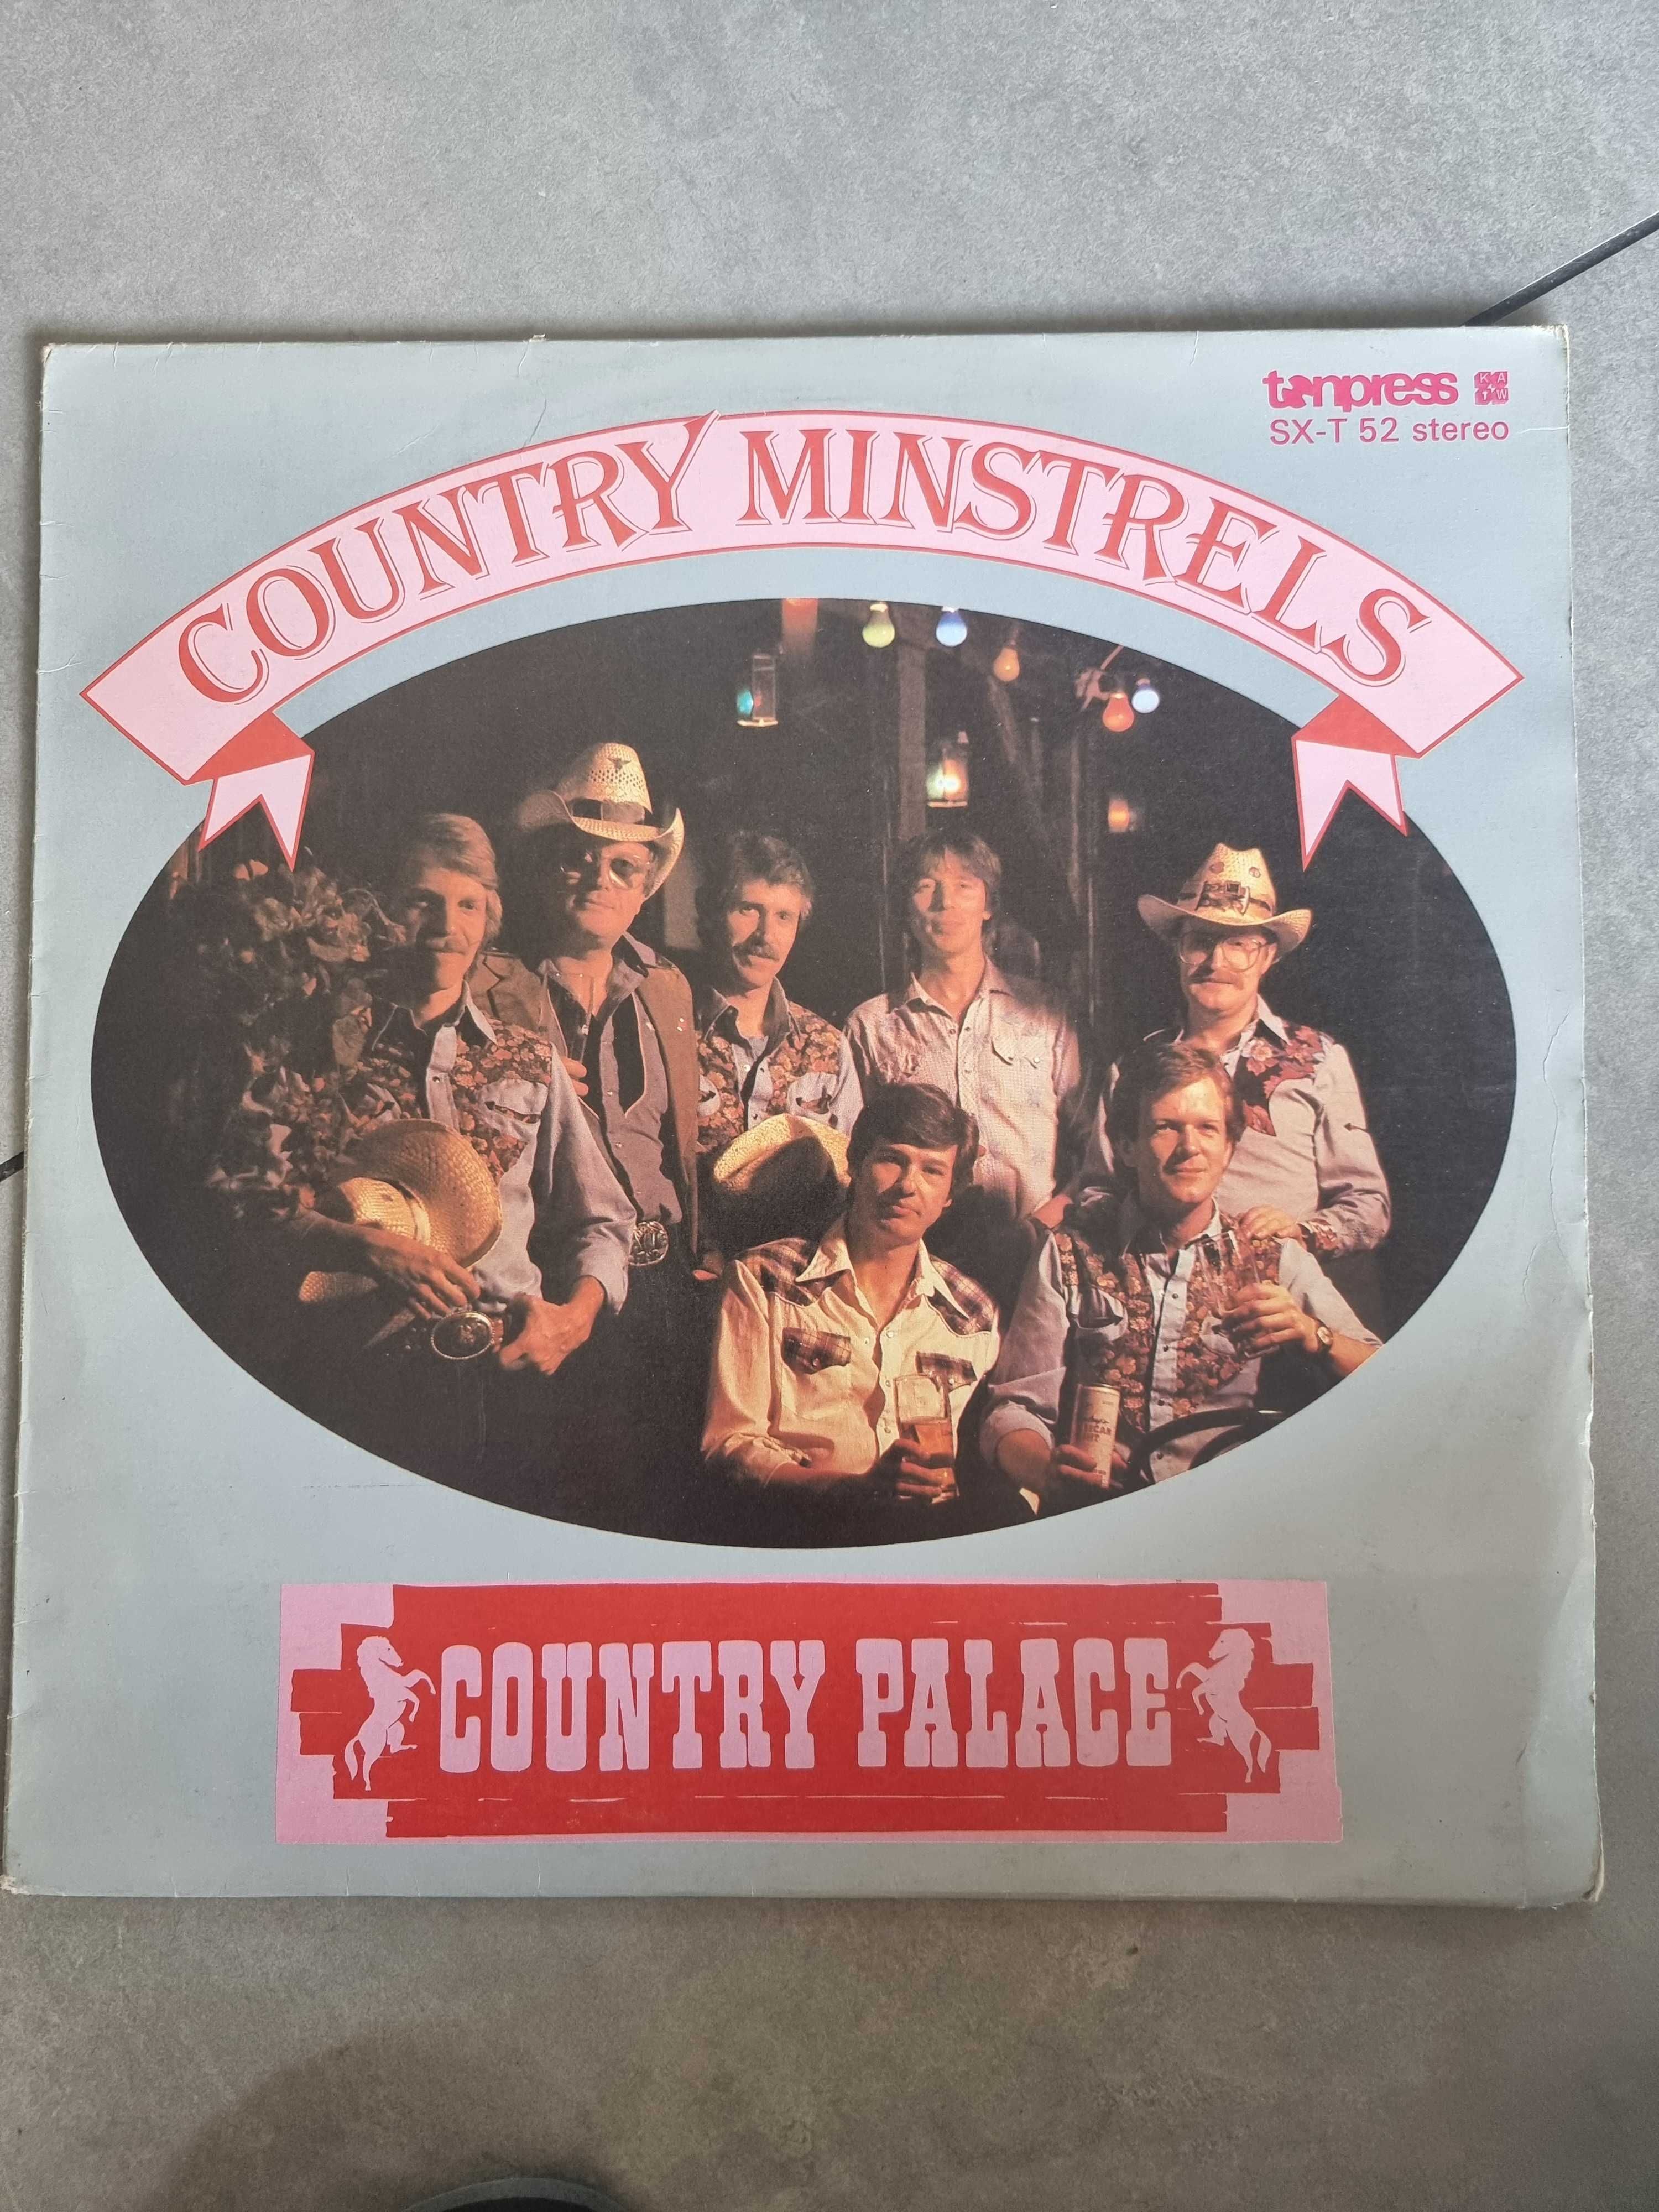 Płyta winylowa Country Minstrels Country Palace winyl 1984